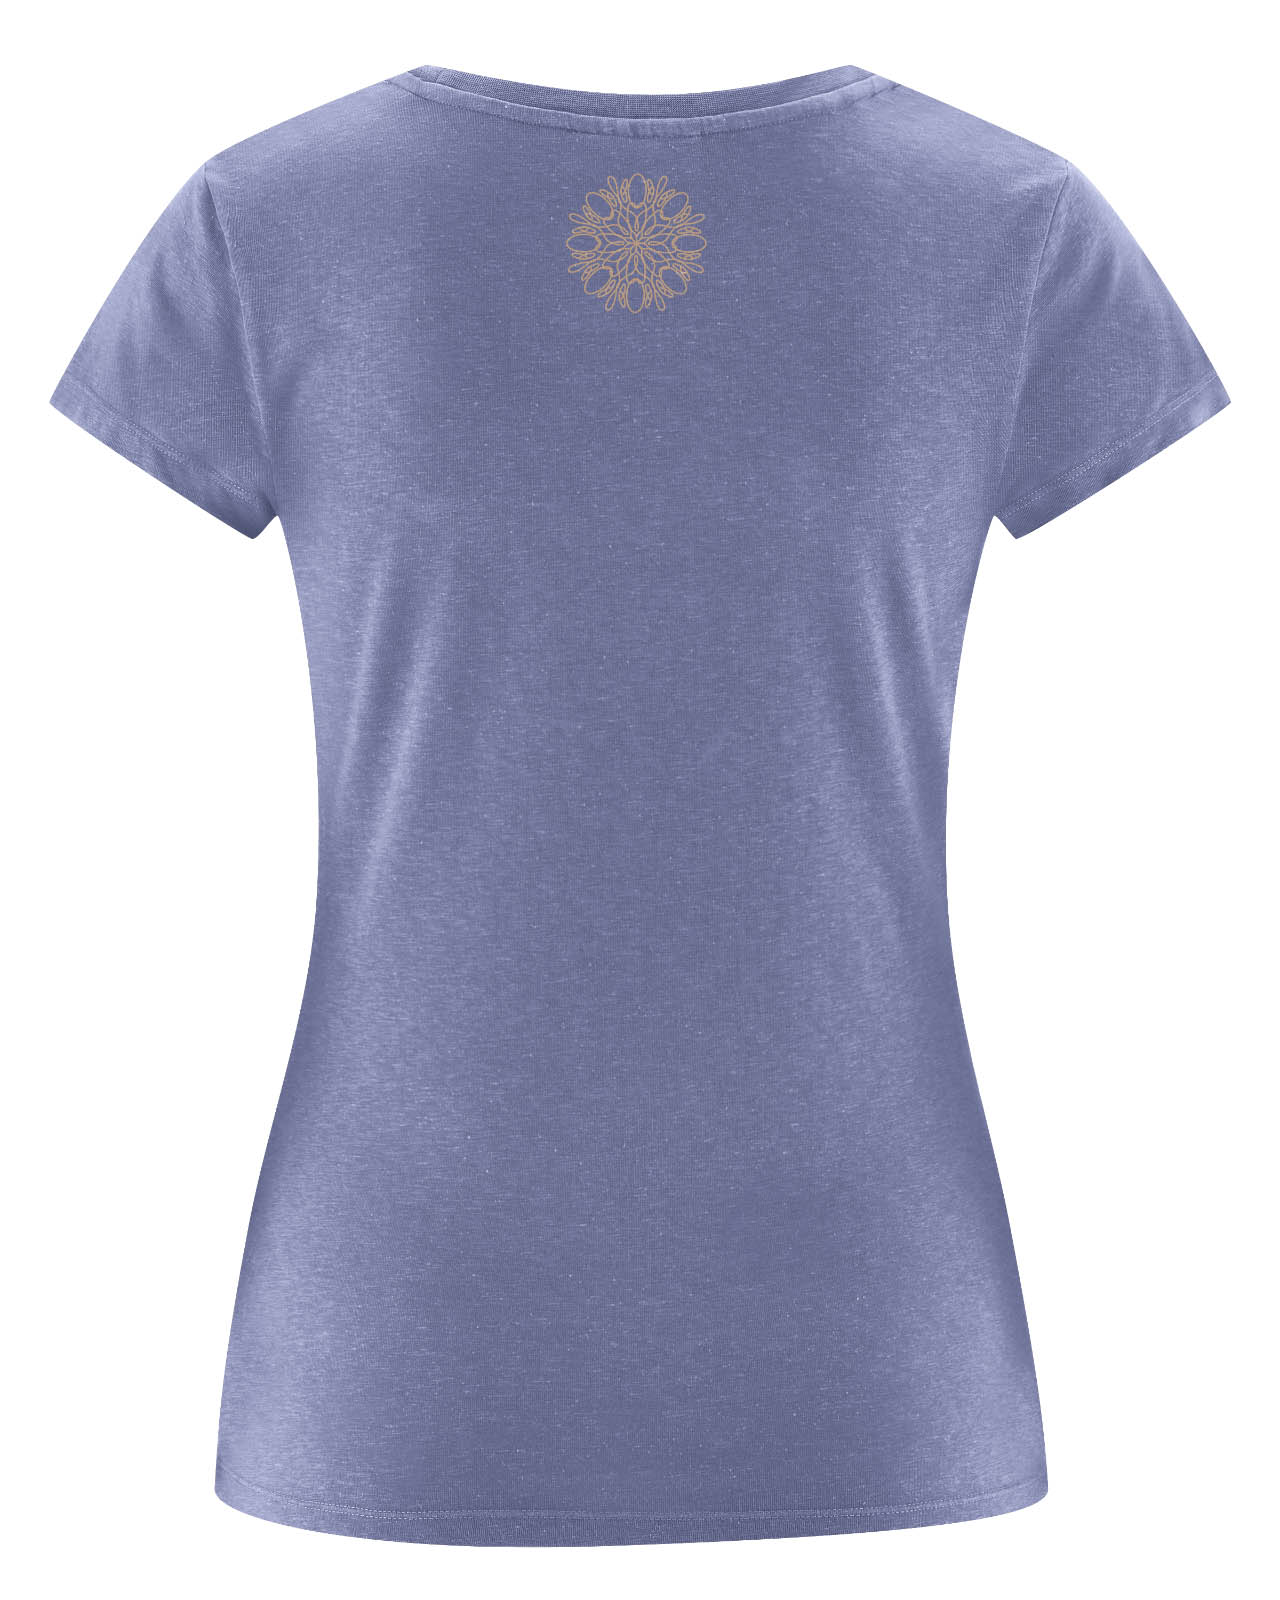 t-shirt sport DH652_lavender(1)